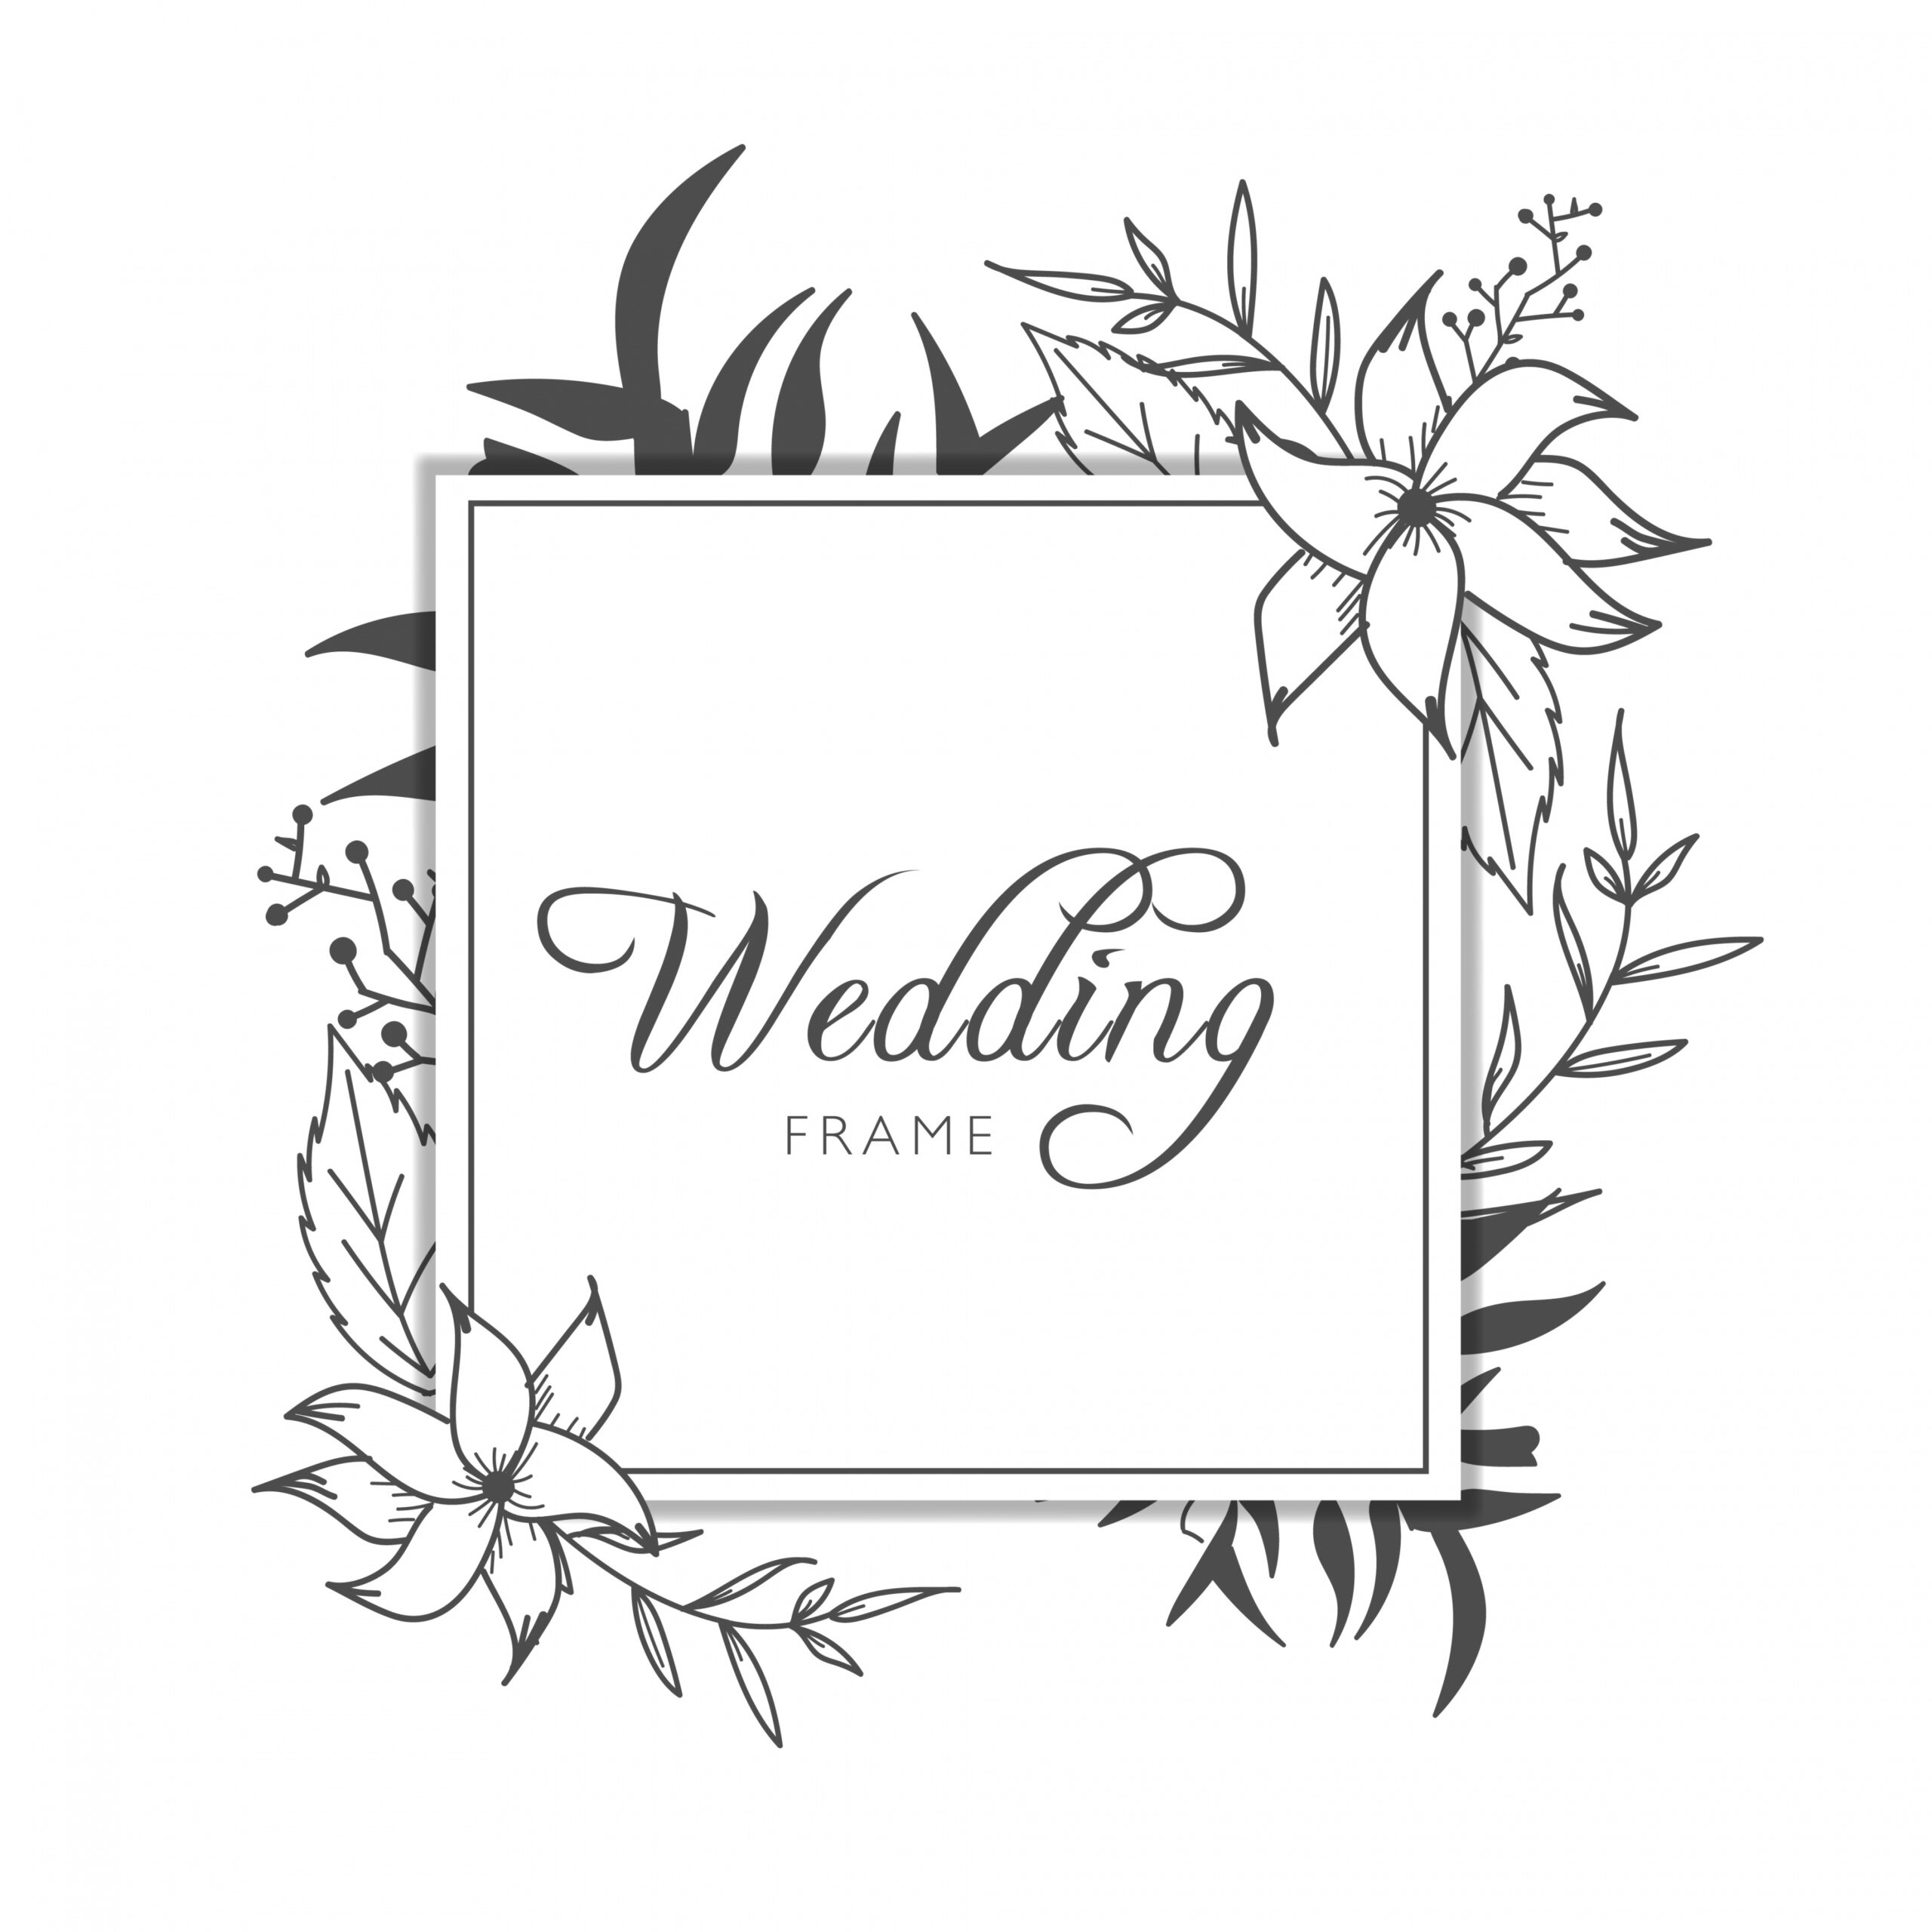 sample floral wedding frame banner card template 602669 vector art at vecteezy a frame banner design template doc